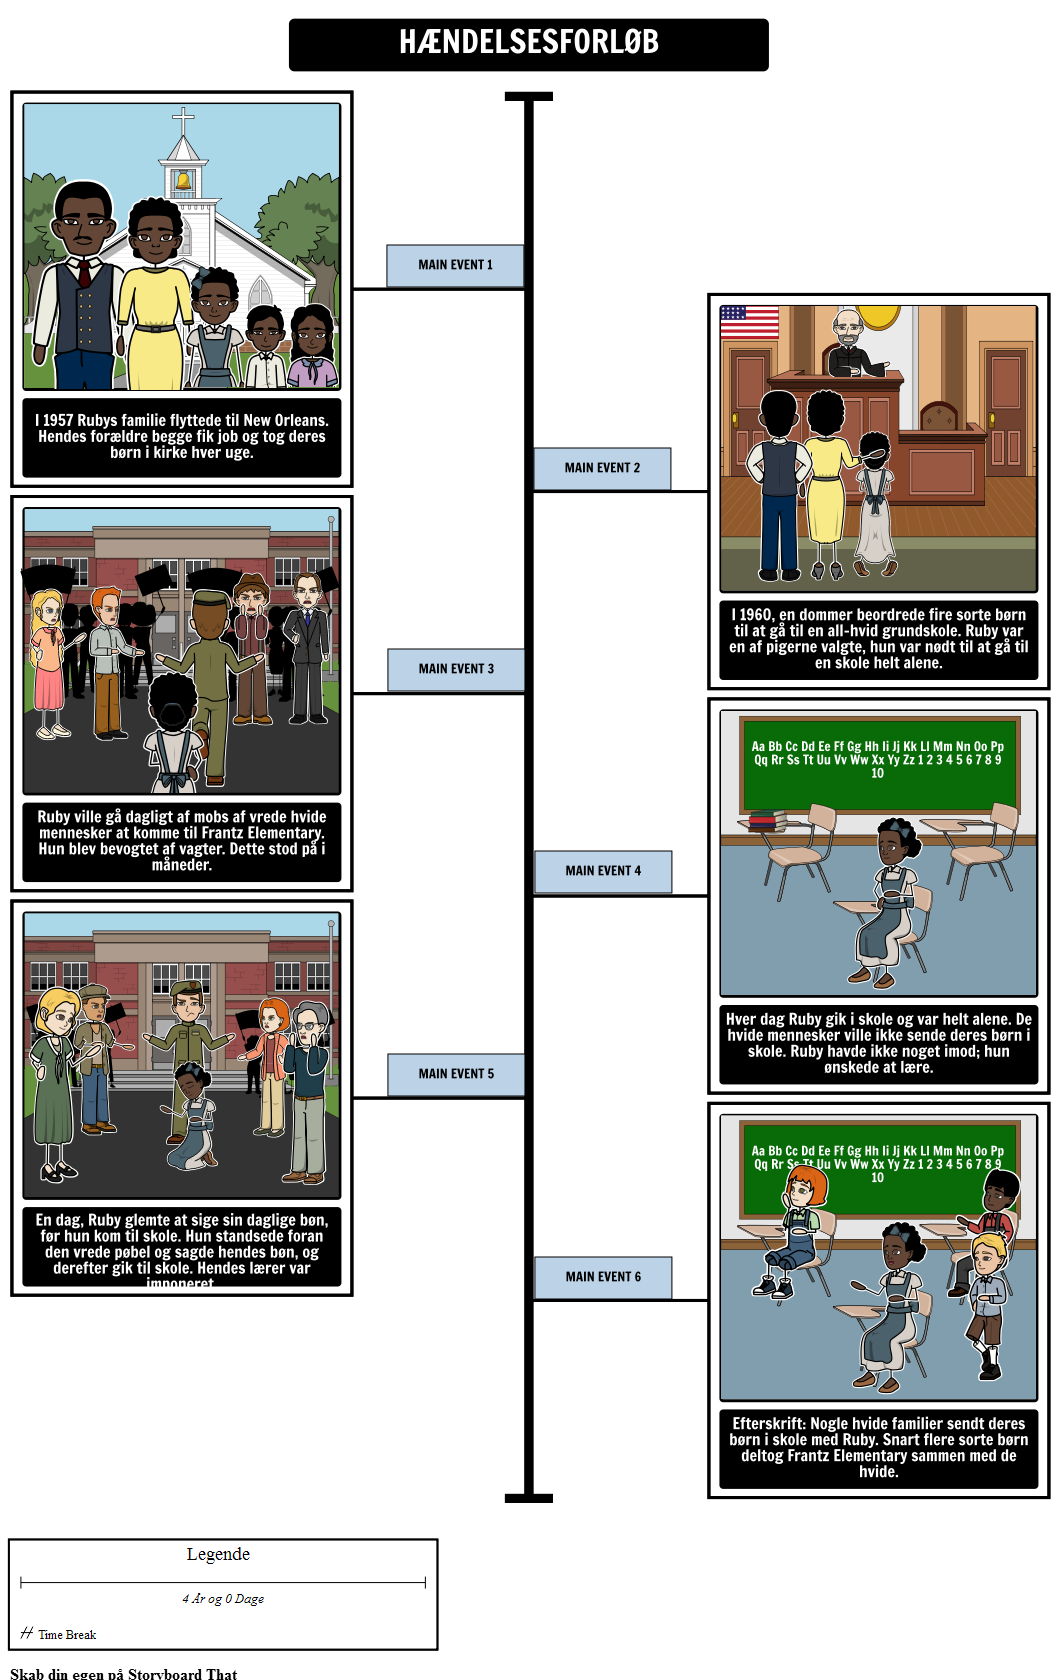 Historien om Ruby Bridges - Sekvens